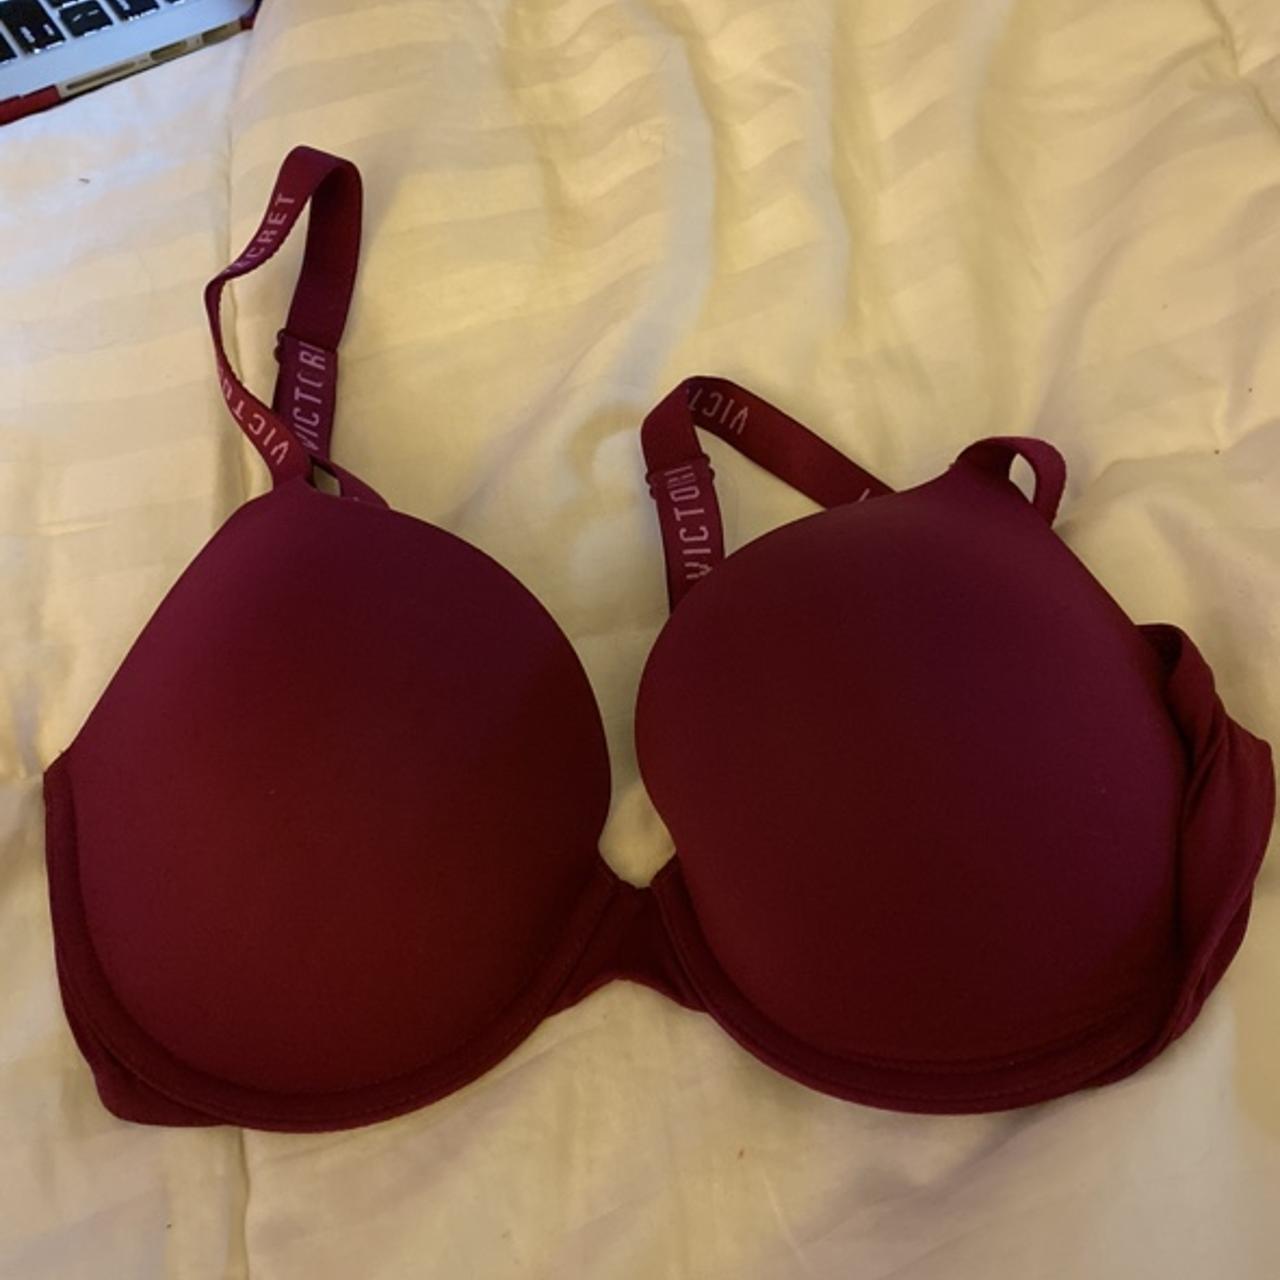 Burgundy push up bra from Victoria's Secret - Depop